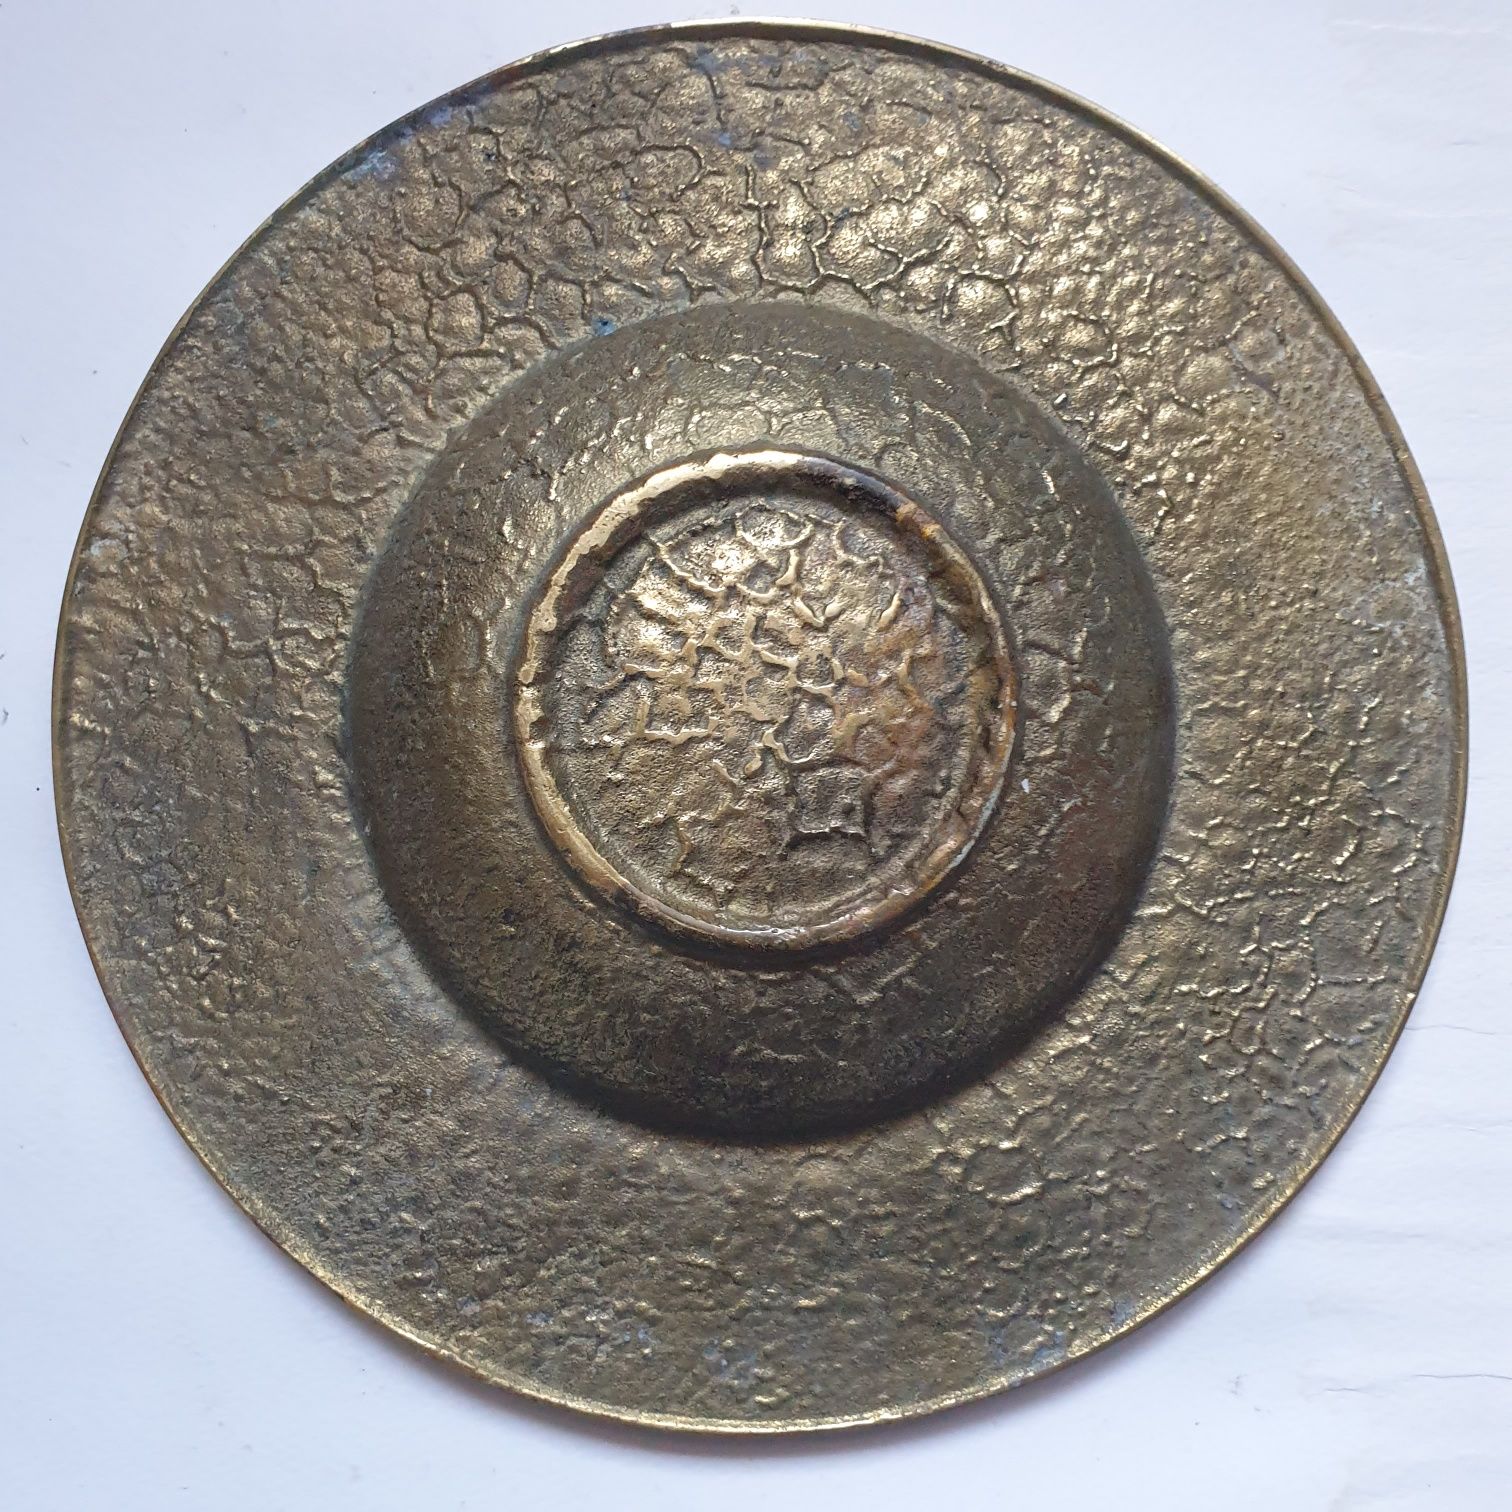 Vintage Danish Bronze Zodiac Dish from Nordisk Malm, 1940s